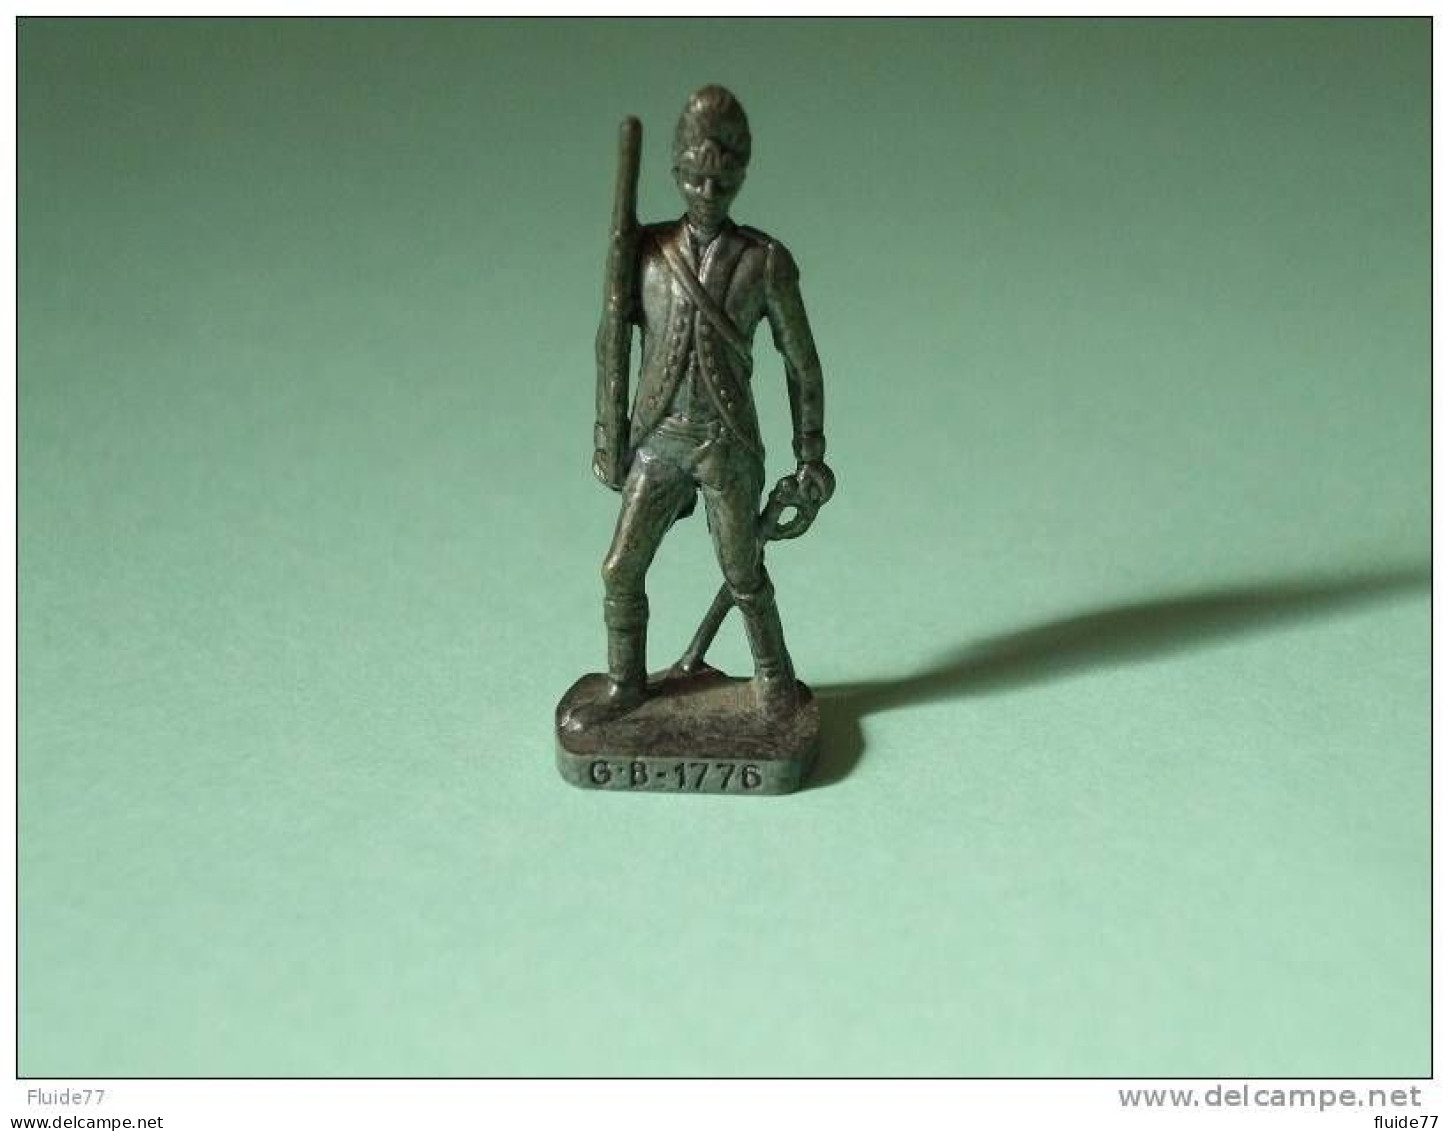 @ BRITANNIQUES De 1770 - Sergent Major  GB  1776 @ - Metal Figurines